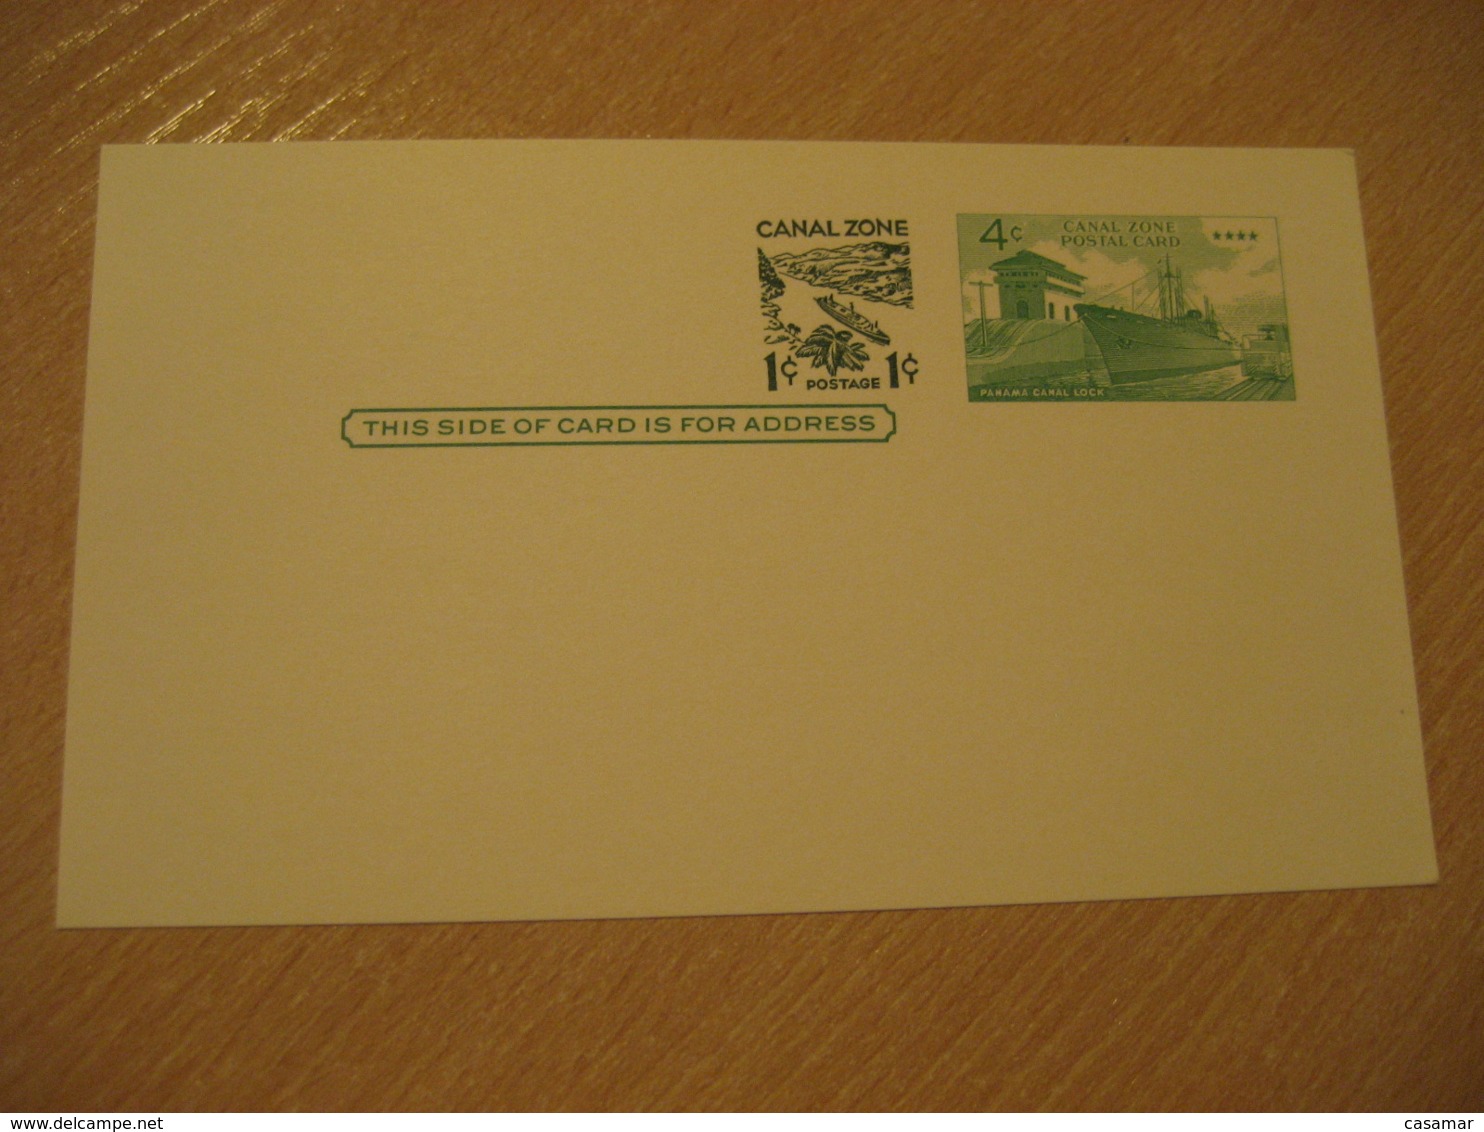 Panama Canal Lock 1c Overprinted 4c Postal Card Postal Stationery Card PANAMA CANAL ZONE C.Z. CZ USA - Panama